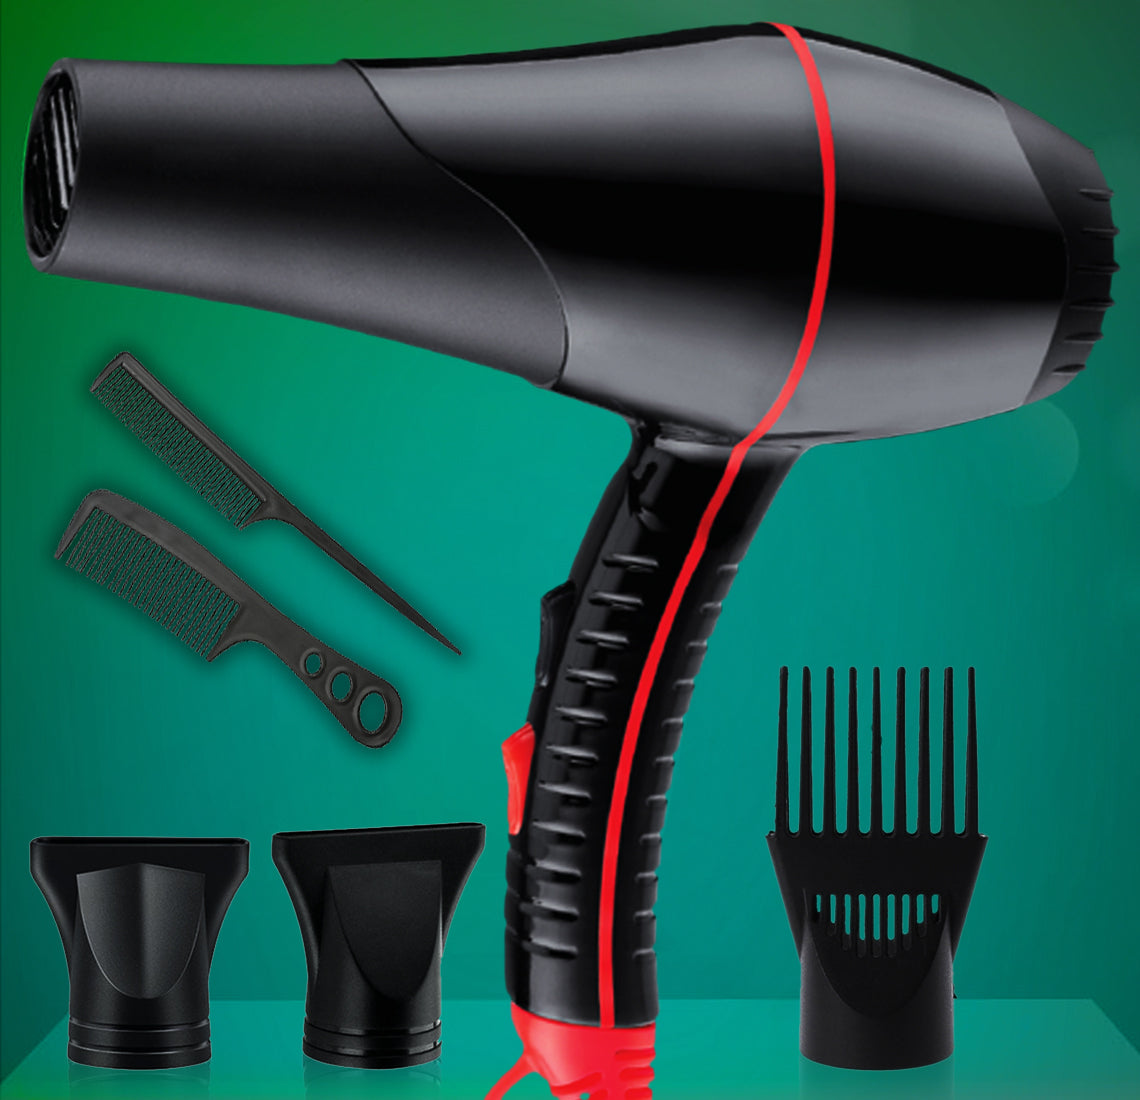 Pick Ur Needs Salon Grade High Range Professional Hair Dryer Hair Dryer With Comb Reducer (4000 Watt)